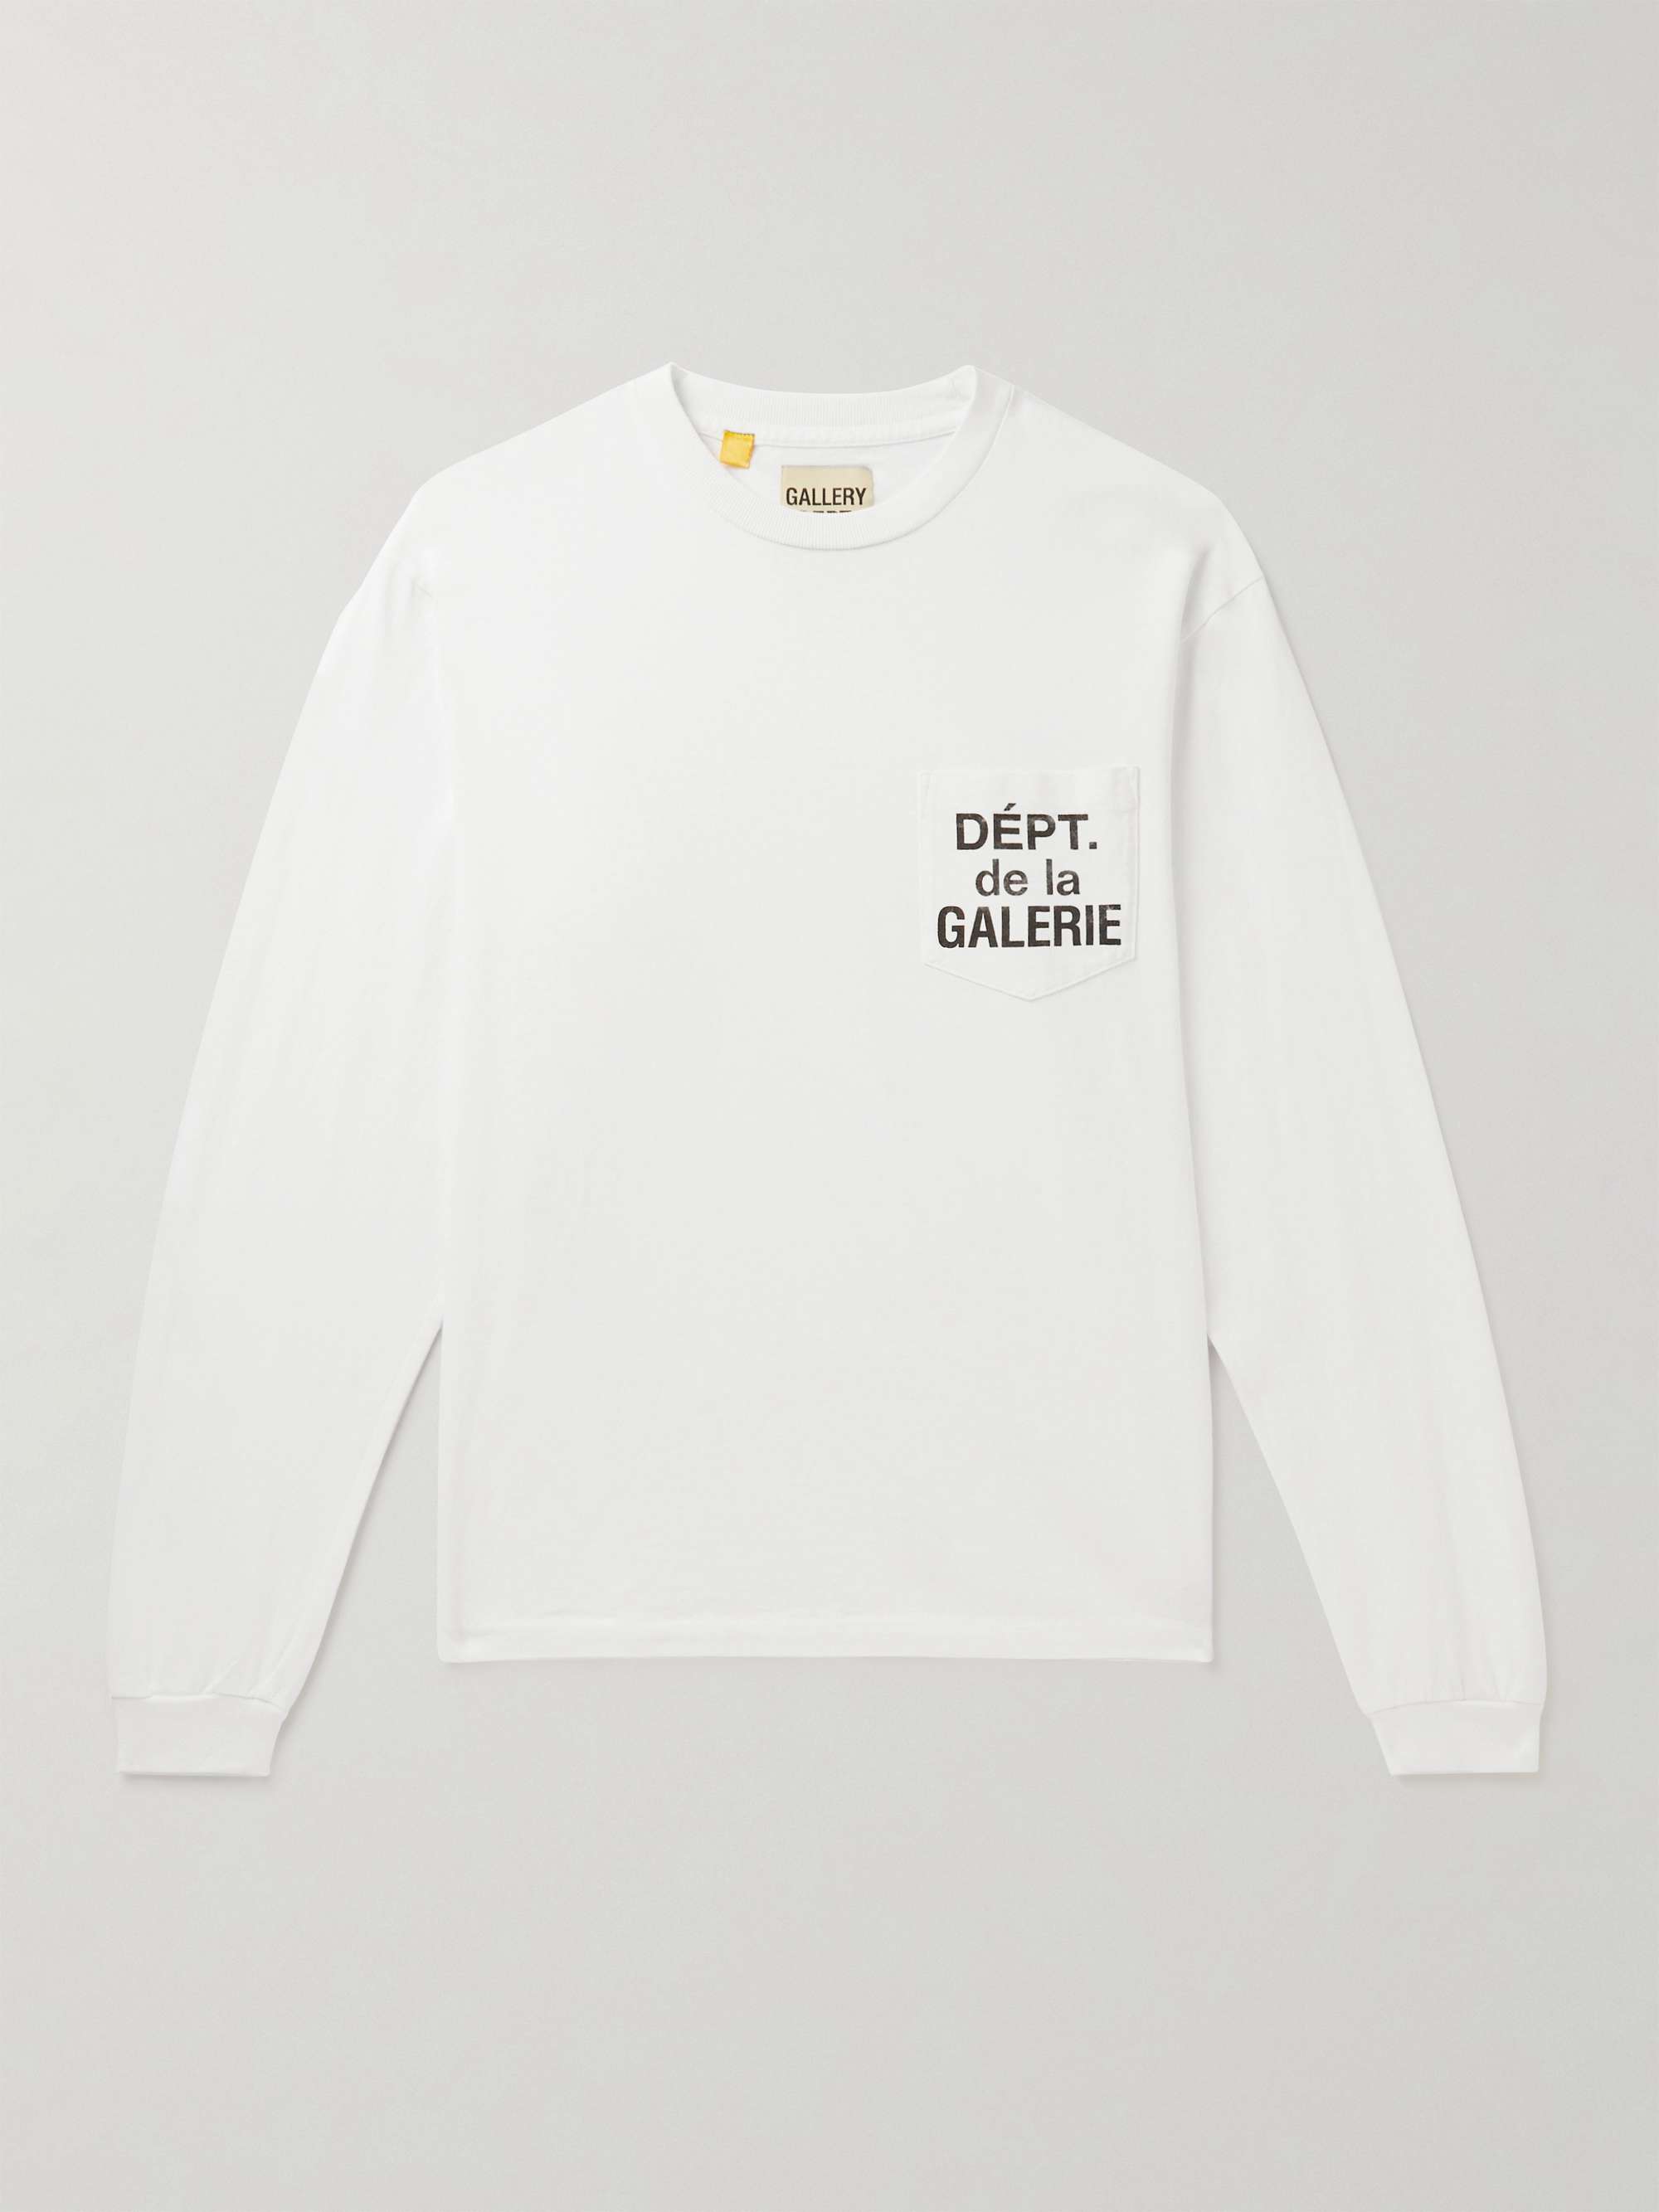 GALLERY DEPT. Dept De La Galerie Printed Cotton-Jersey T-Shirt